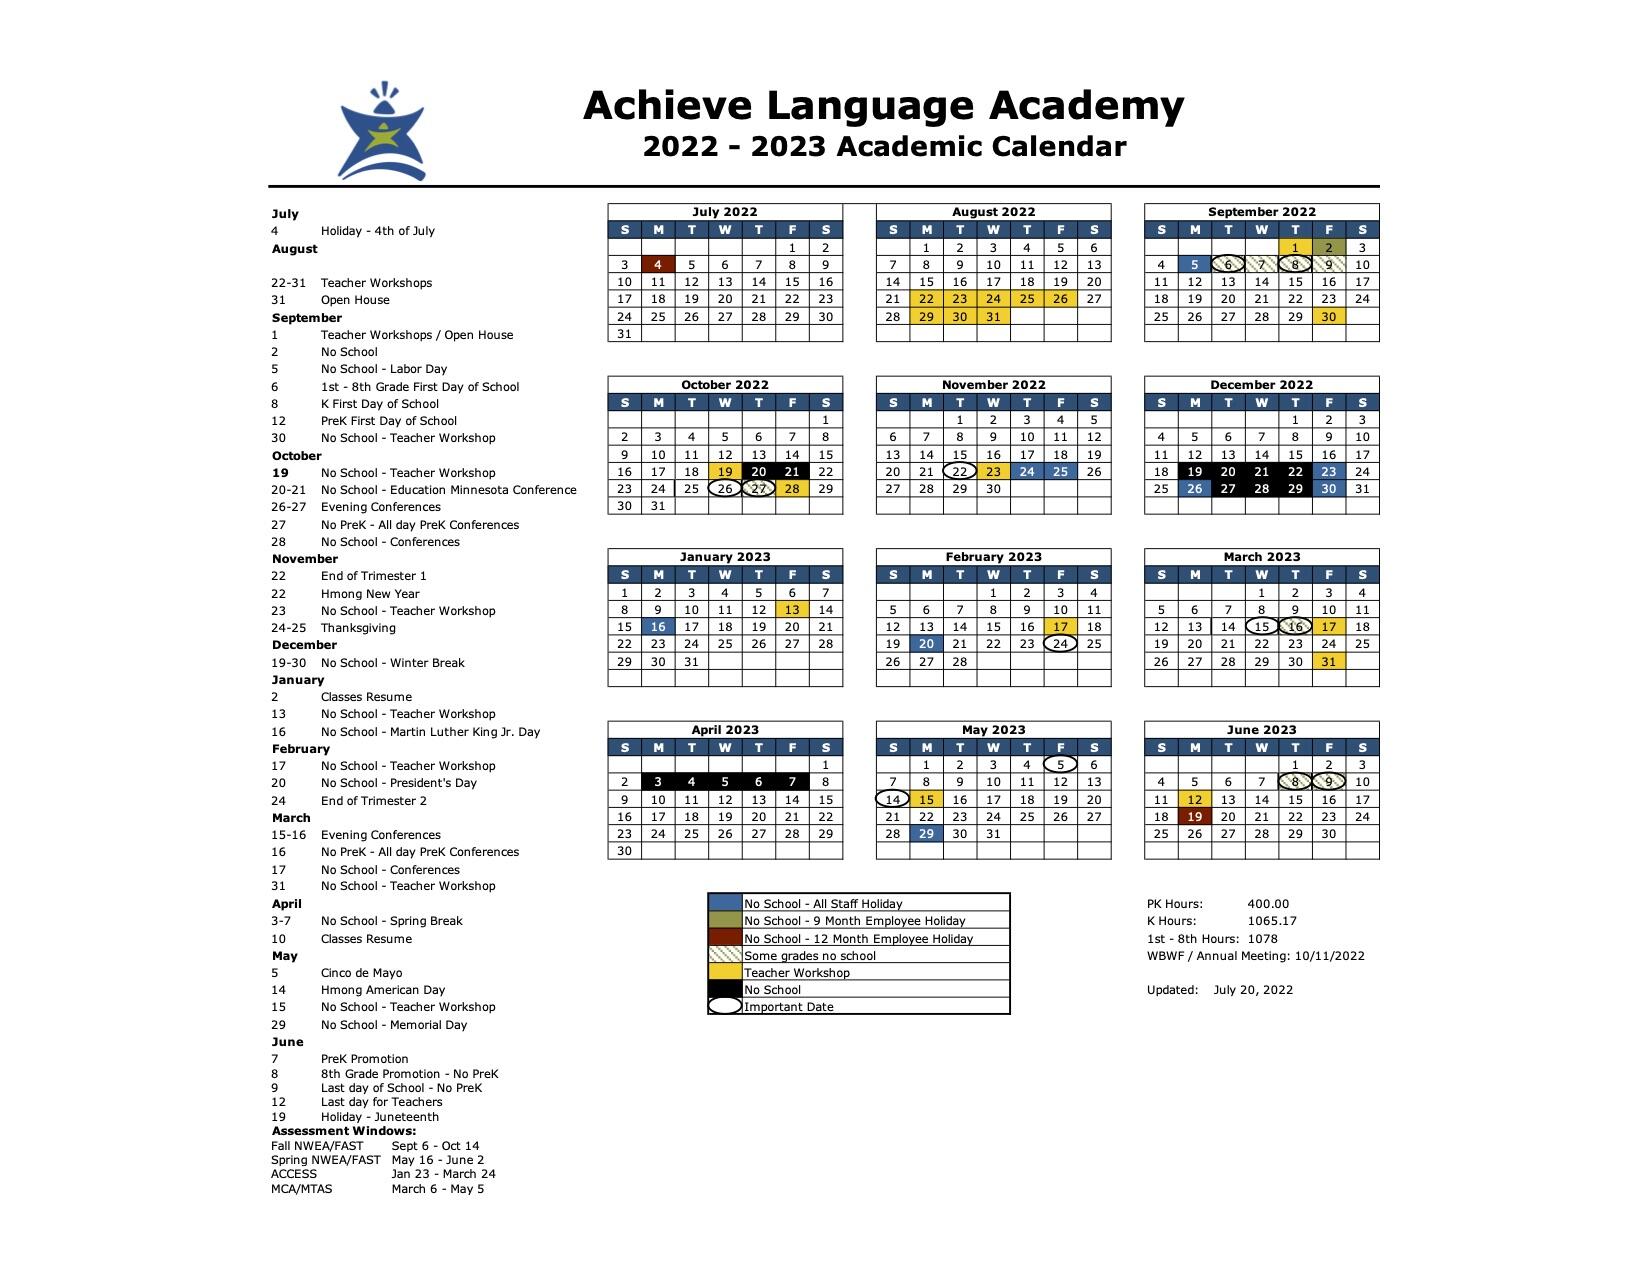 Achieve Academy Printable Events Calendar for 2022-2023